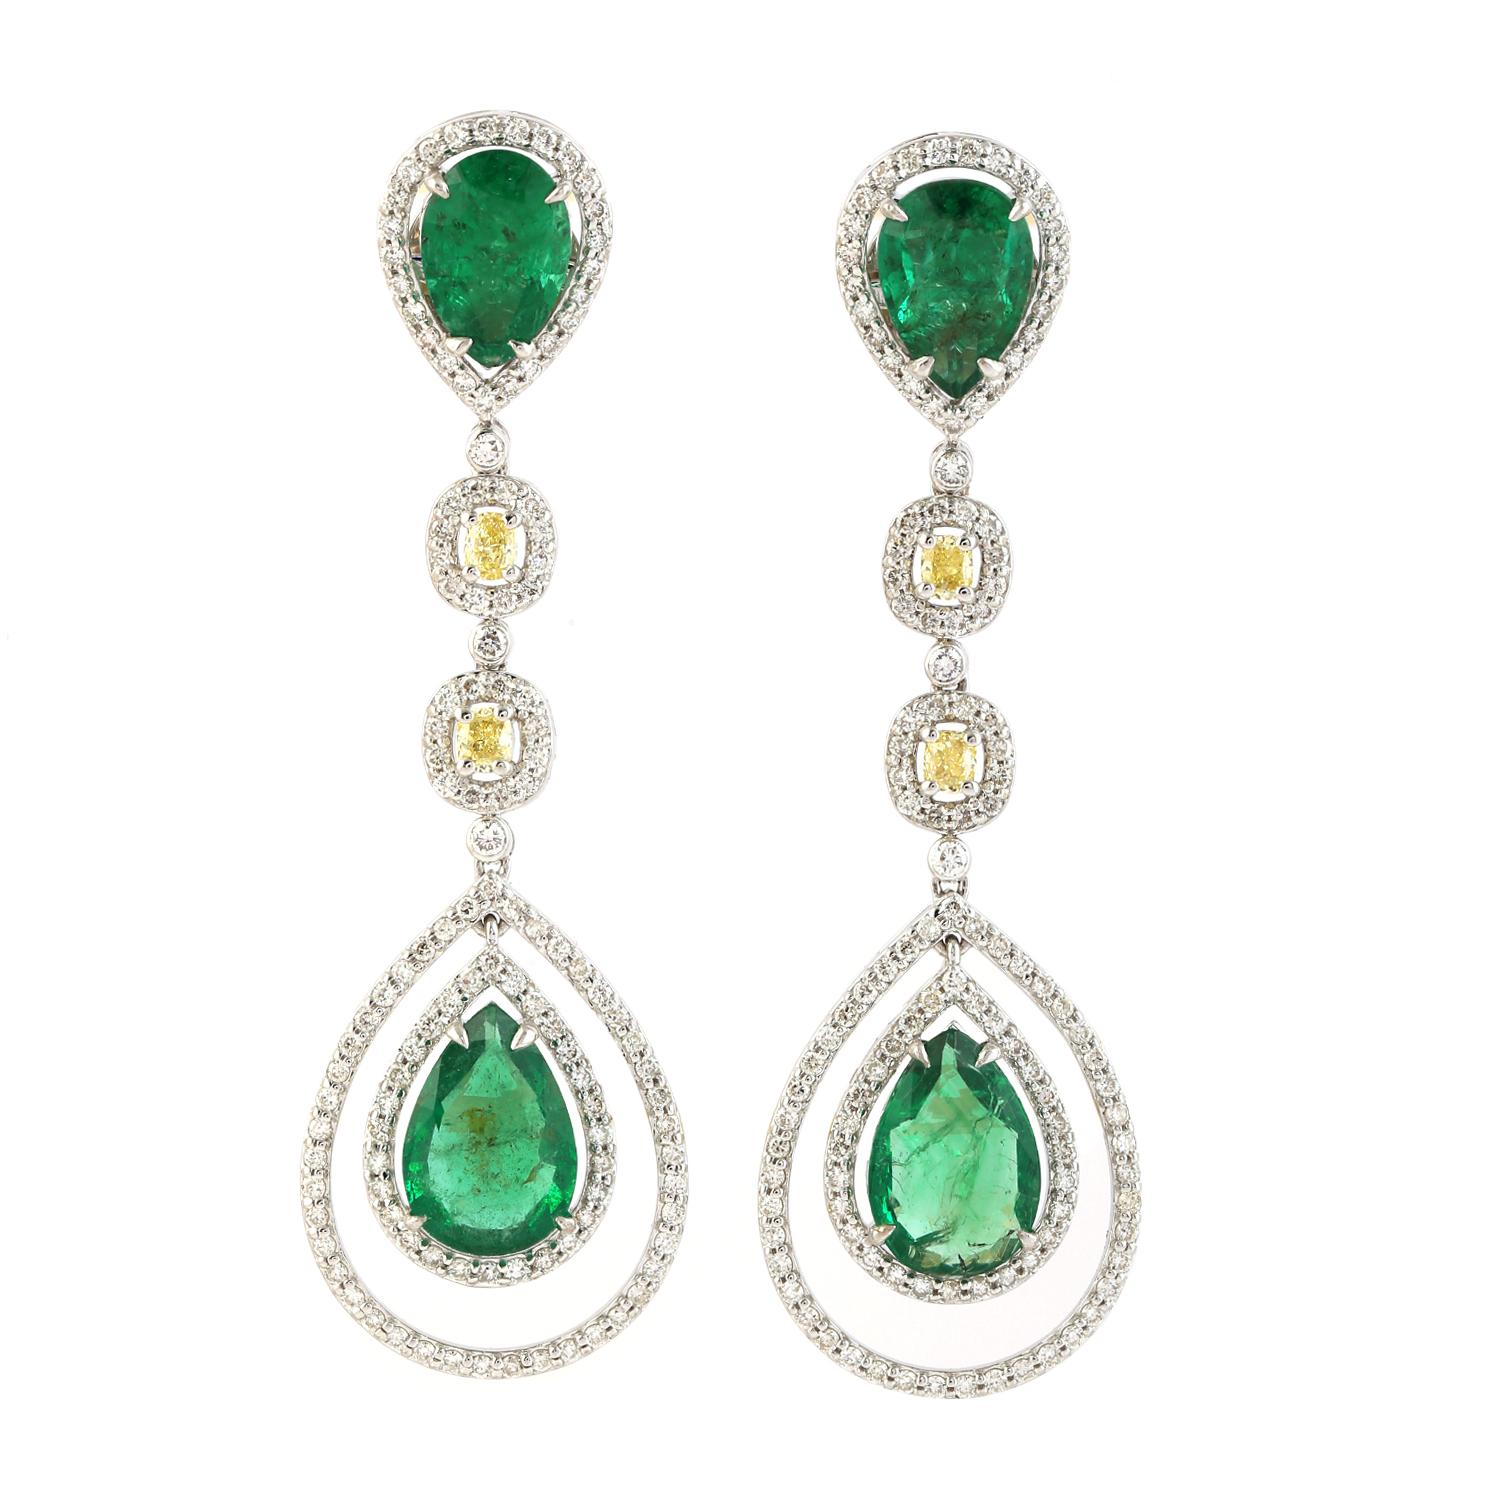 Mixed Cut Pear Drops Zambian Emeralds Earrings with Cushion Shaped Yellow Diamonds in 18k For Sale